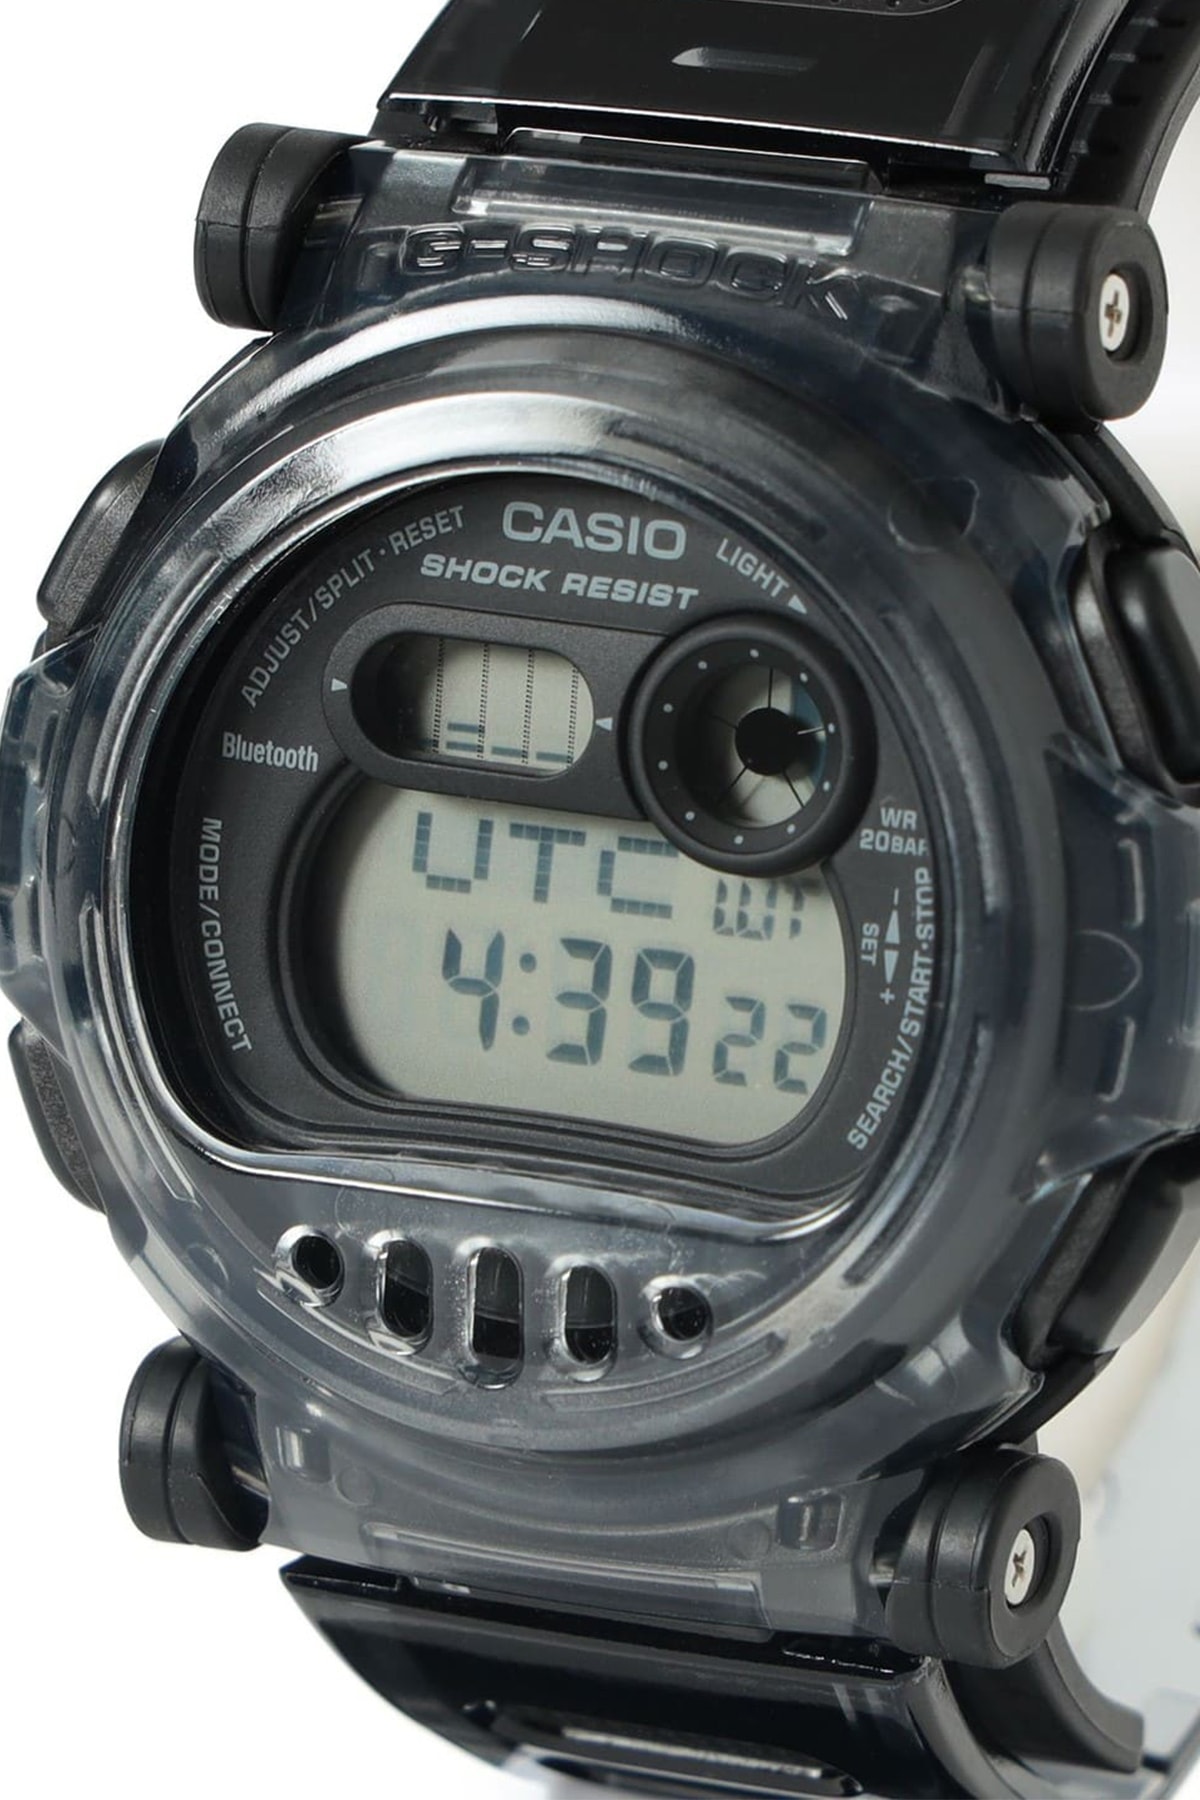 BEAMS x G-Shock 全新聯名系列錶款正式發佈